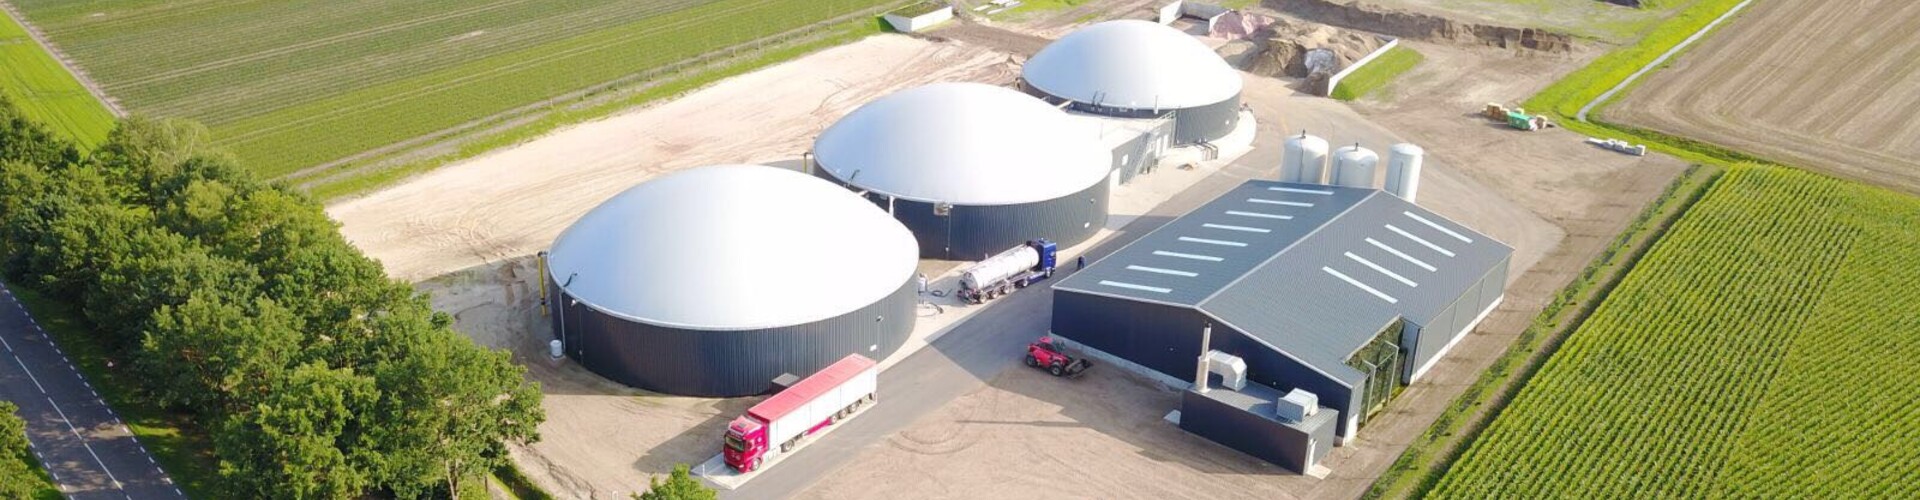 Biogas installation Hardenberg, the Netherlands